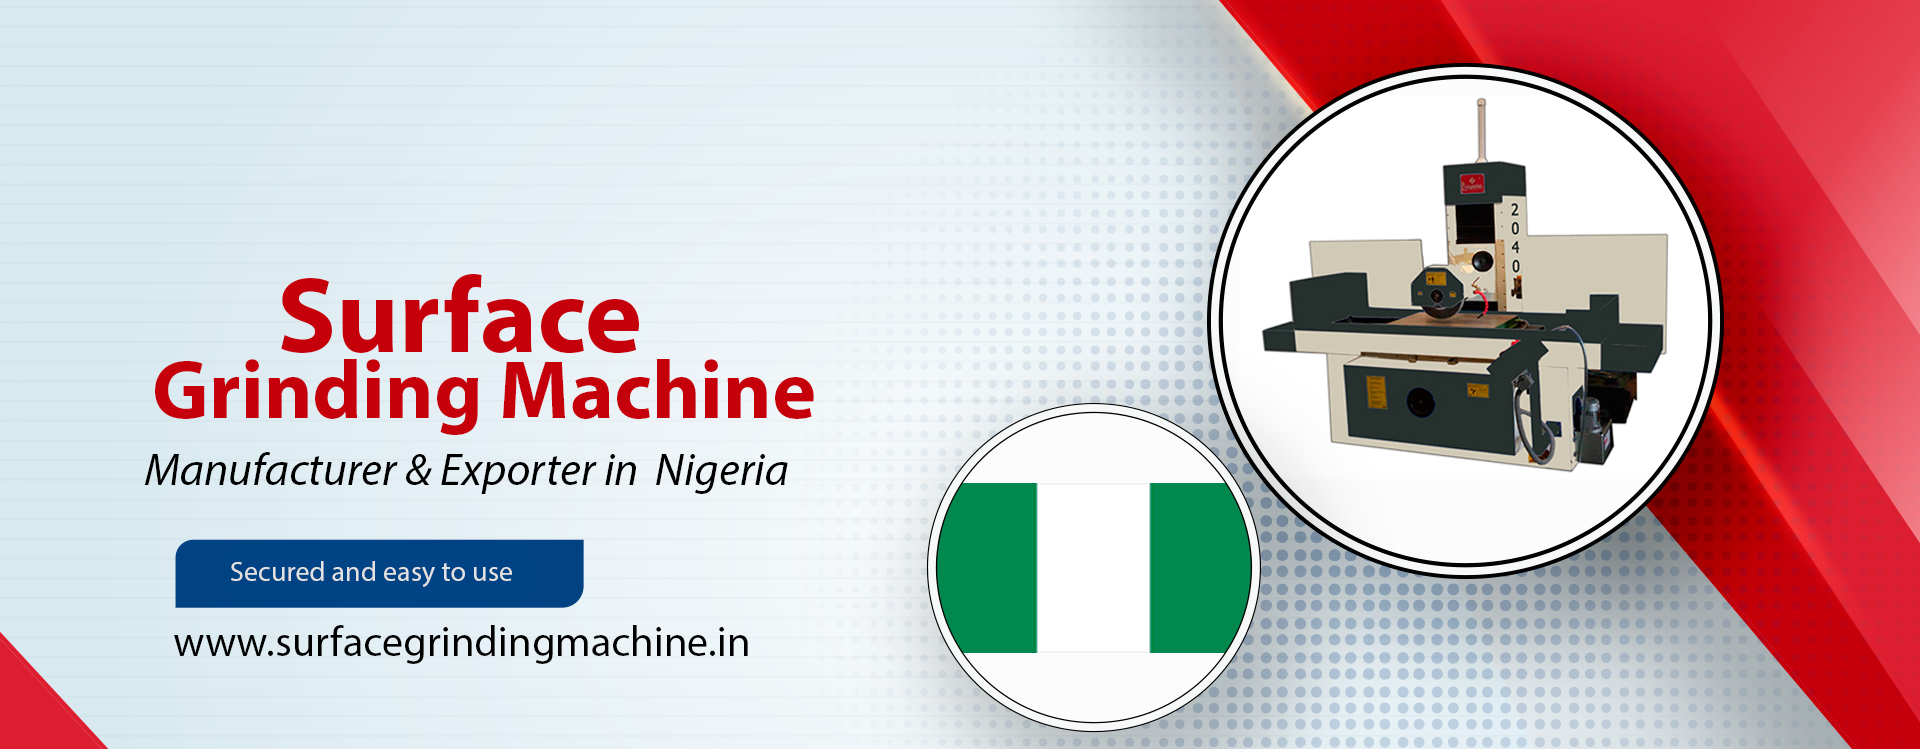 Surface Grinding Manufacturer Nigeria